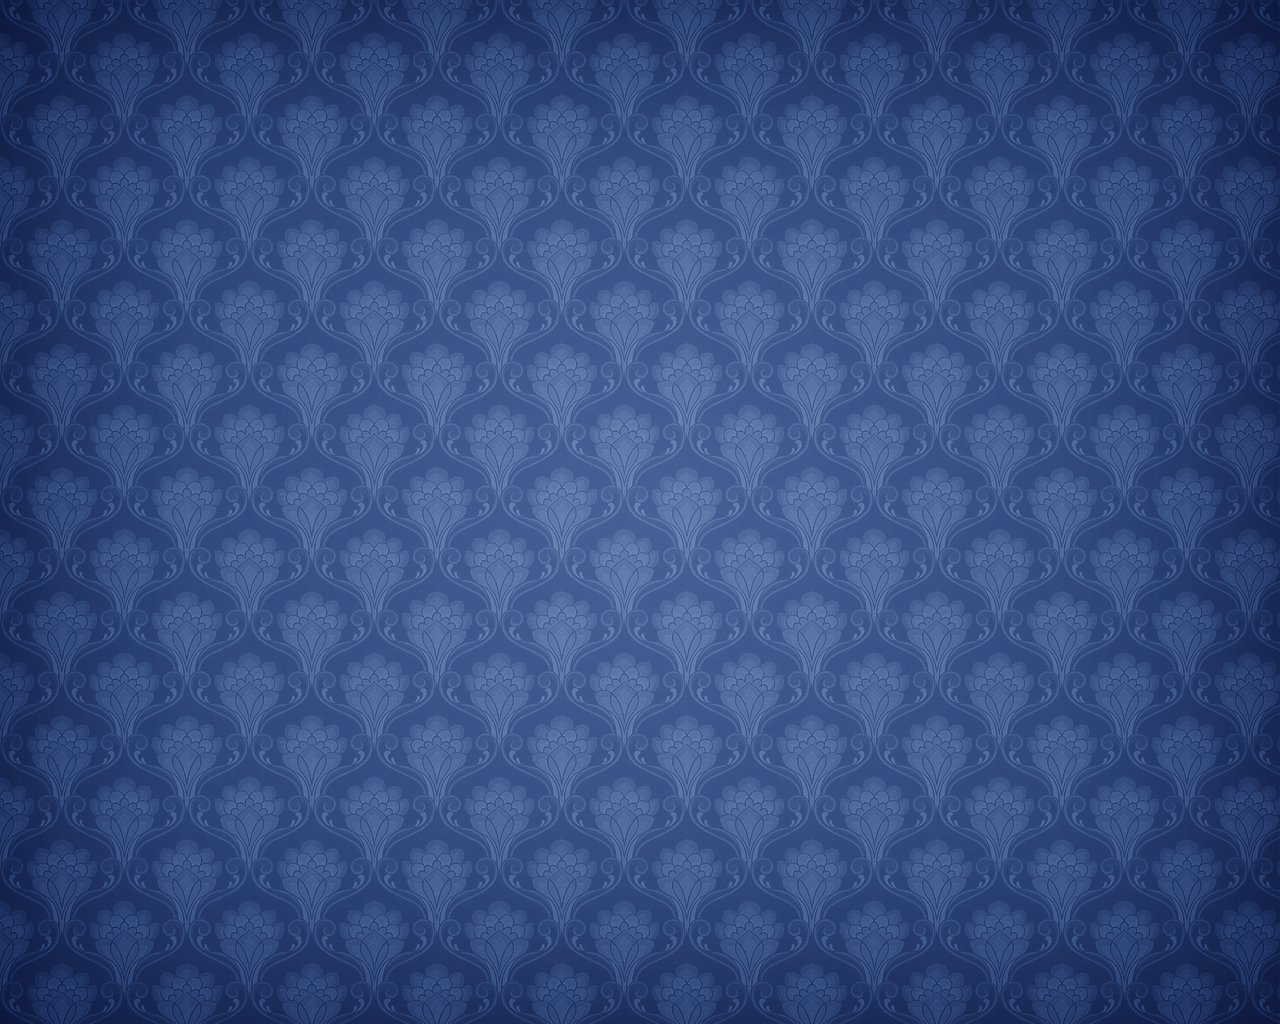 Pattern Wallpaper Template by lukeroberts on DeviantArt